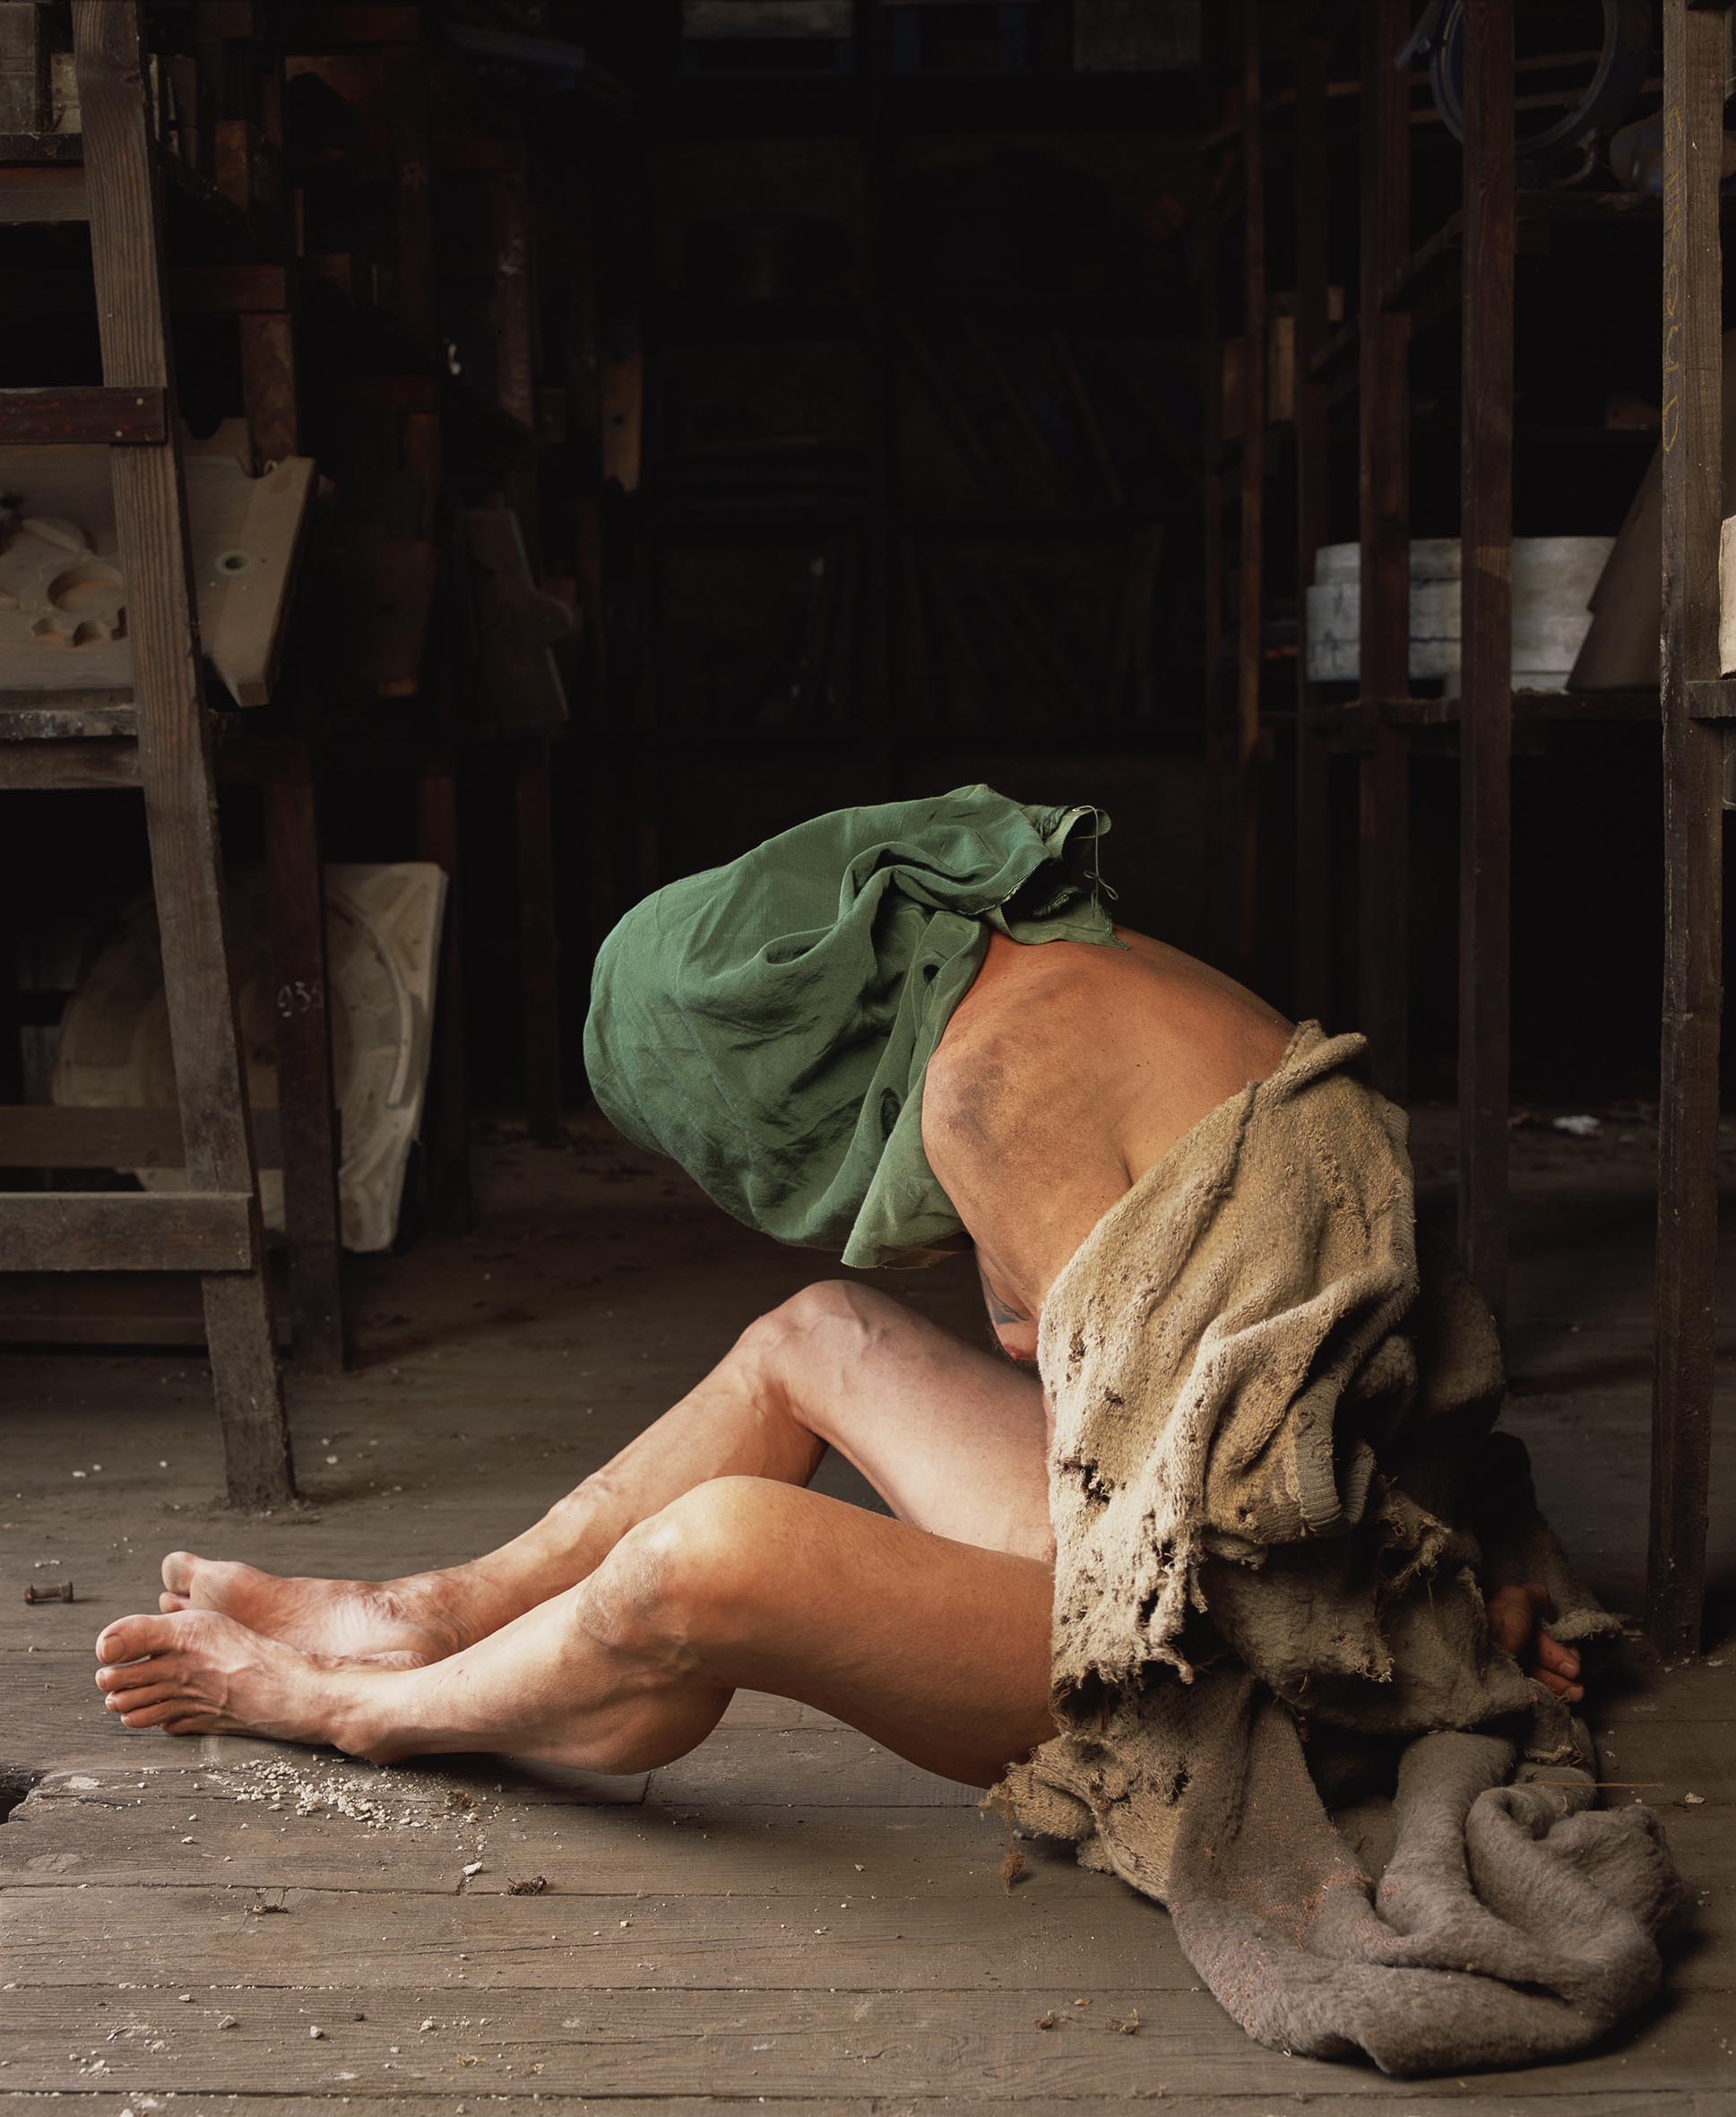 Andres Serrano, Untitled XVIII (Torture), 2015. Courtesy of Andres Serrano & Galleria Alfonso Artiaco